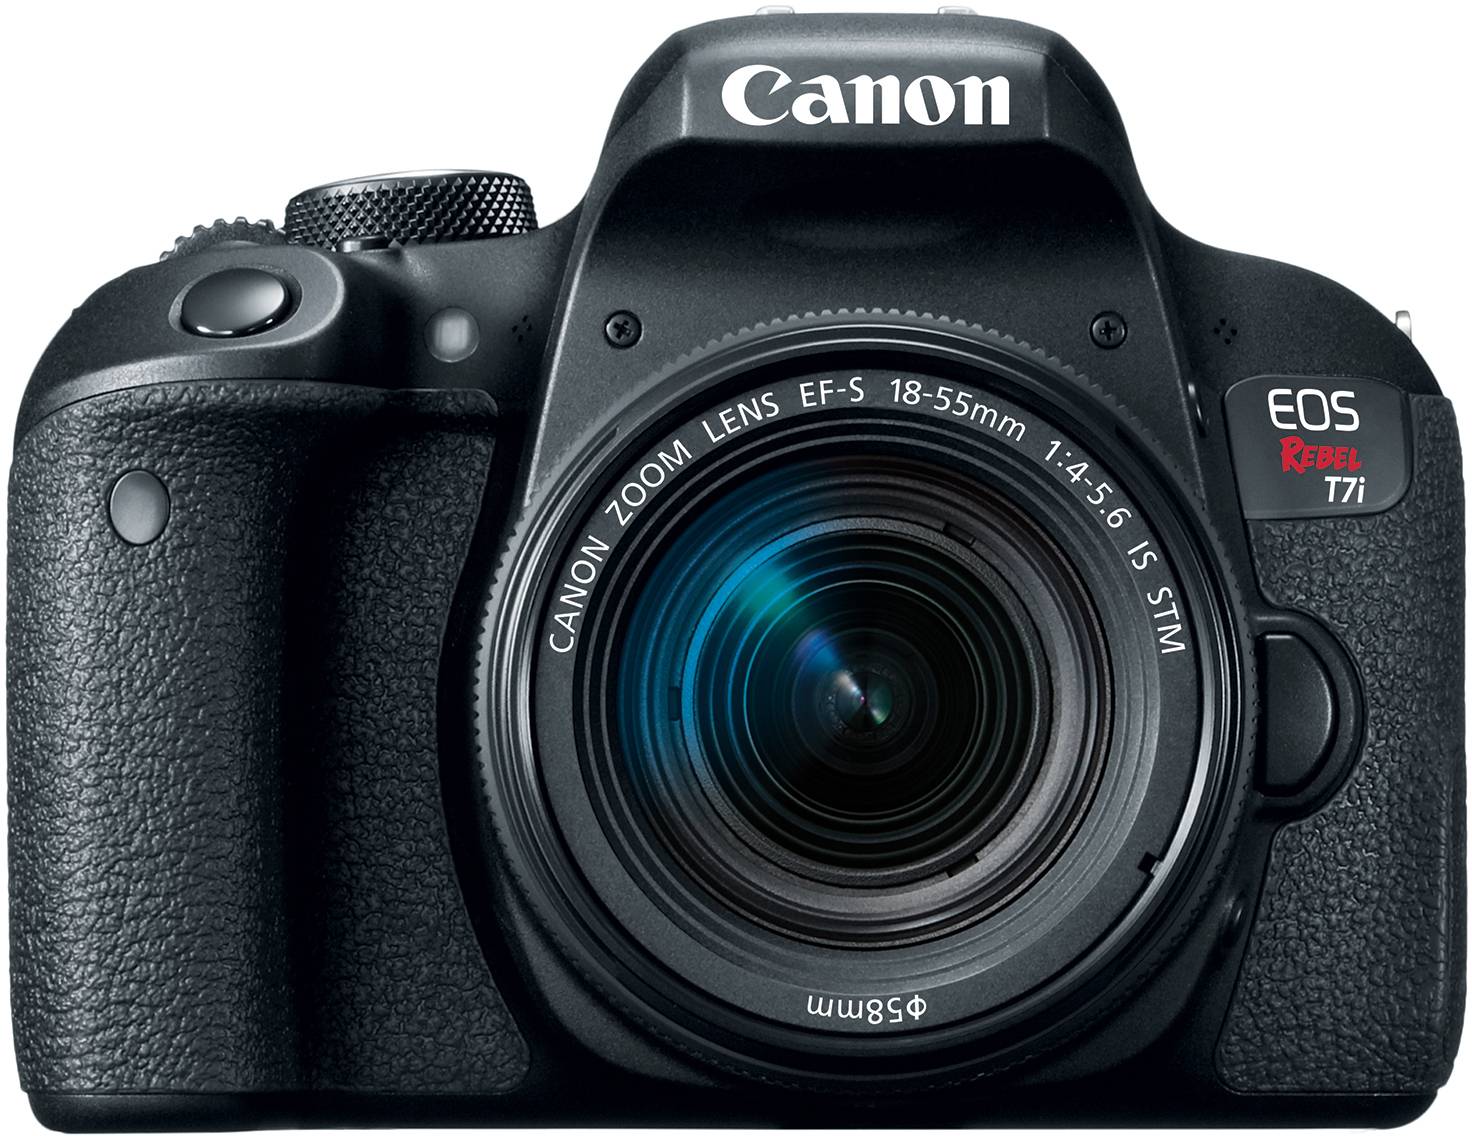 Canon EOS Rebel T7i DSLR Camera with EF-S 18-55mm IS STM Lens